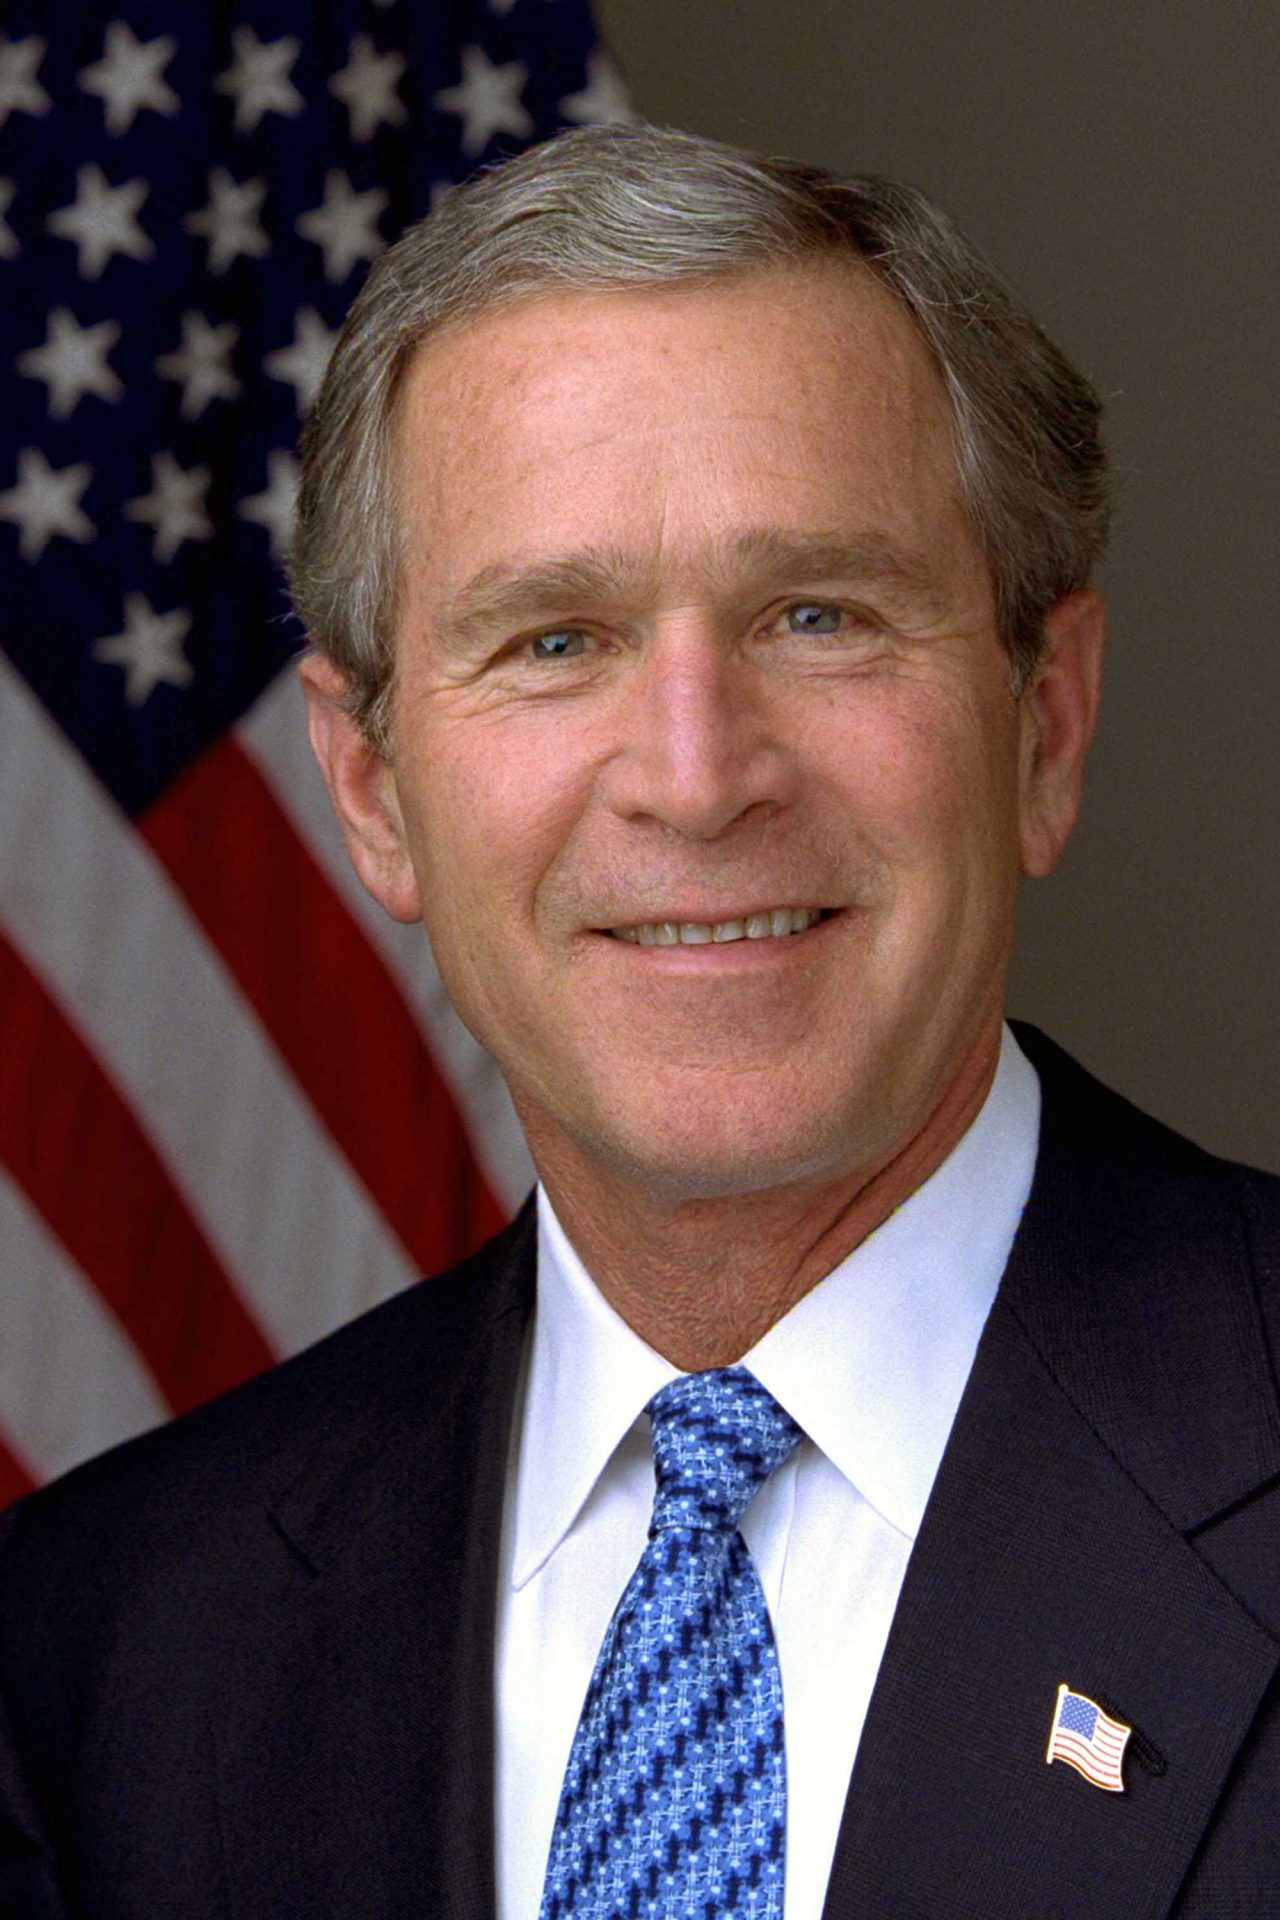 George W. Bush was ranked 32nd